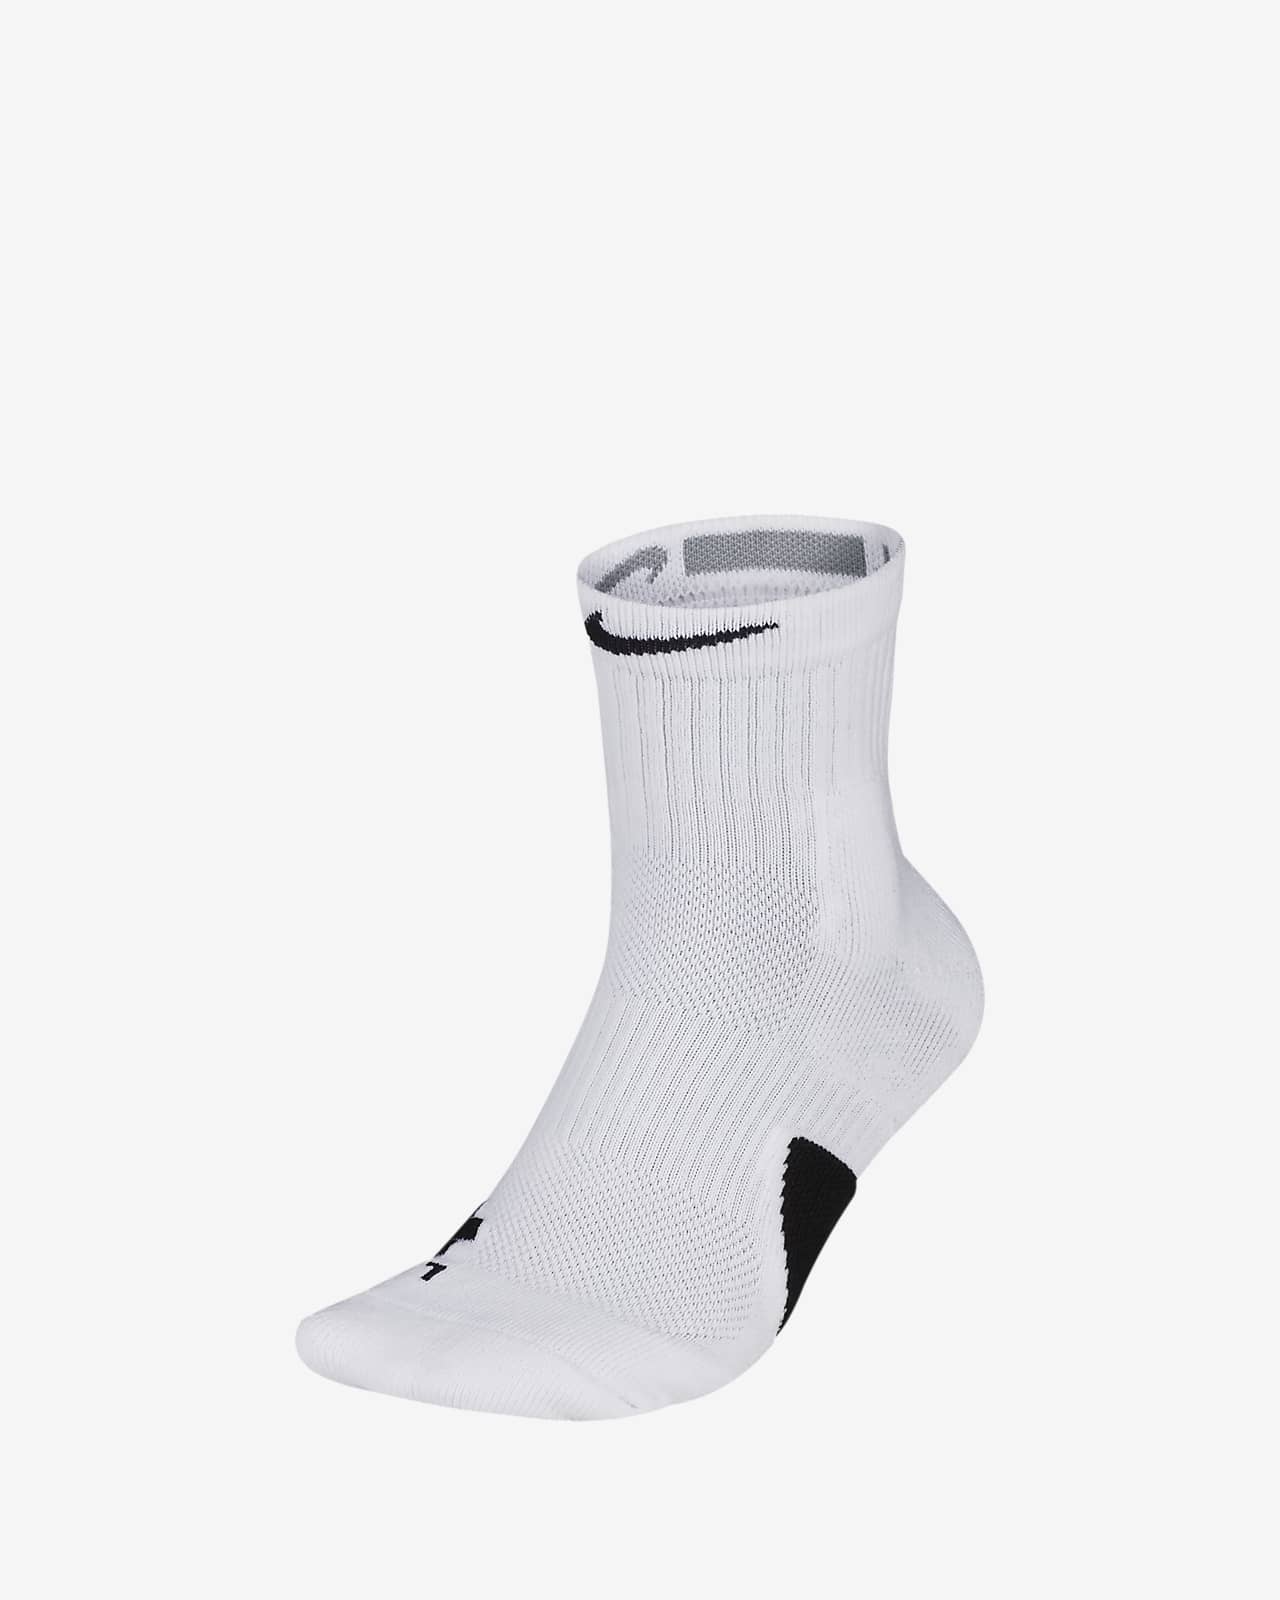 nike mid basketball socks